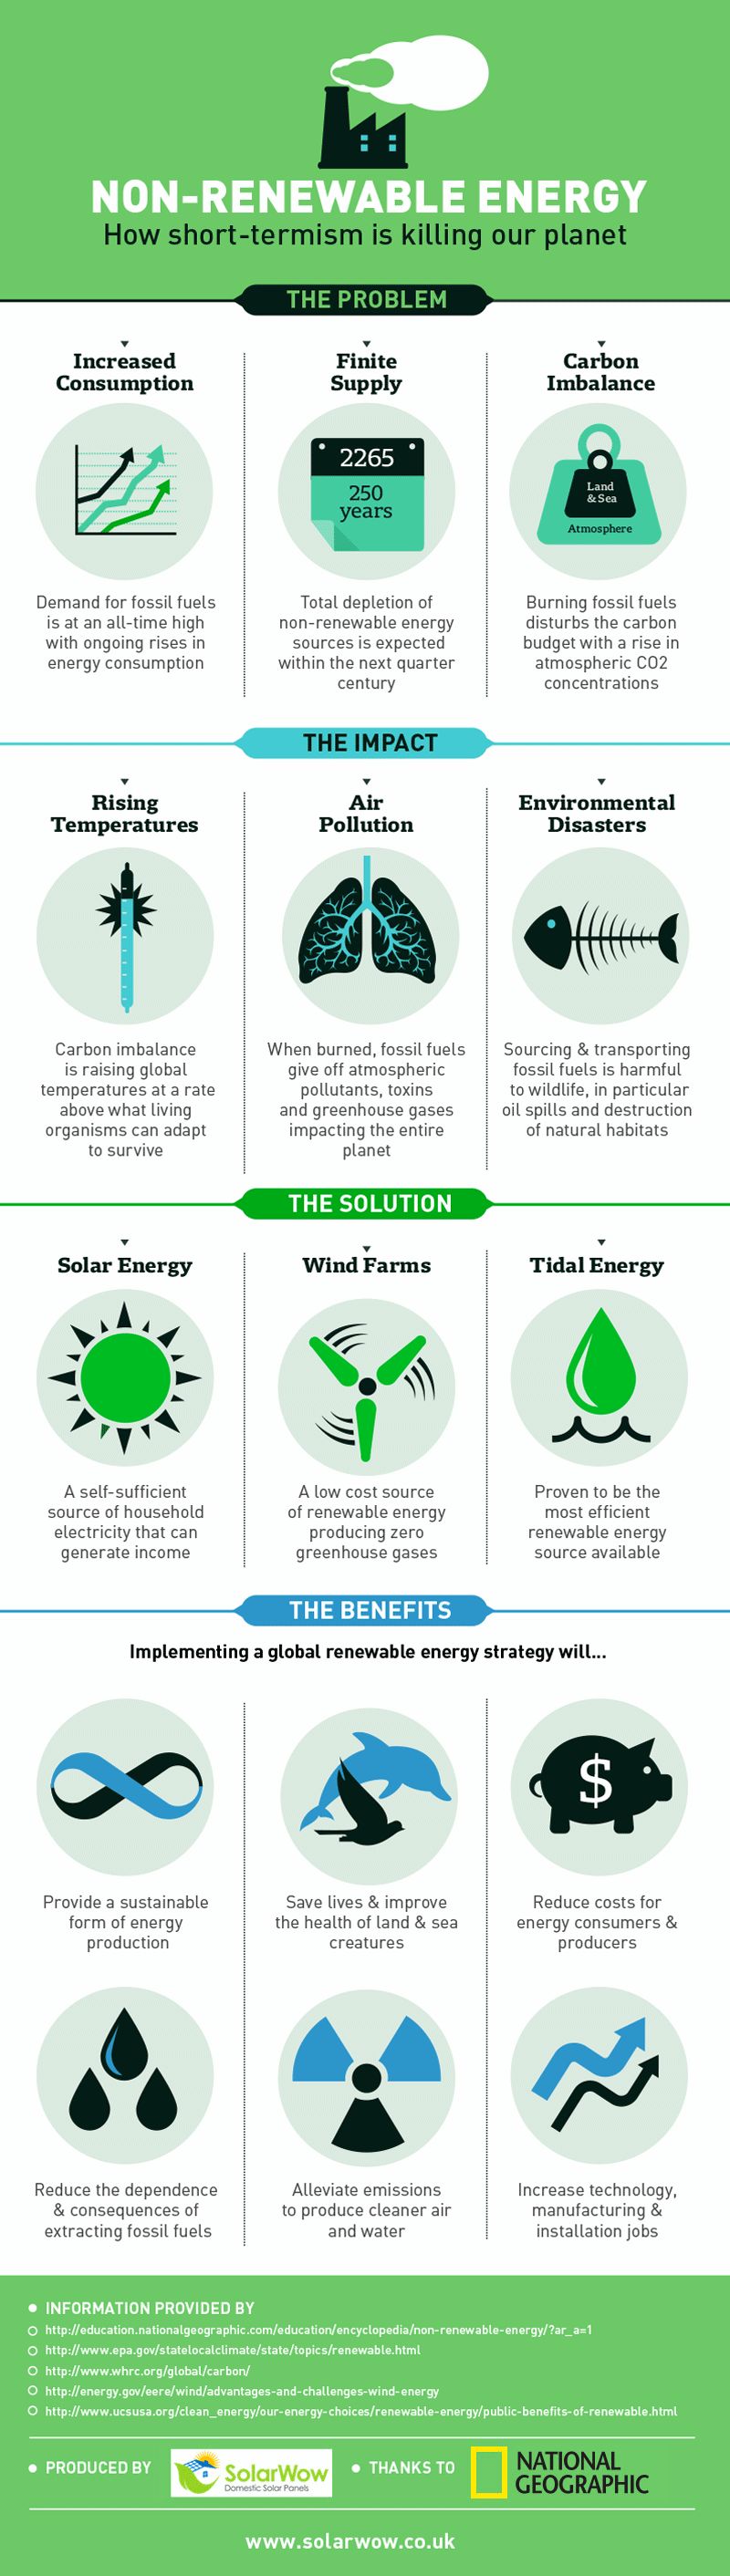 solar energy infographic future